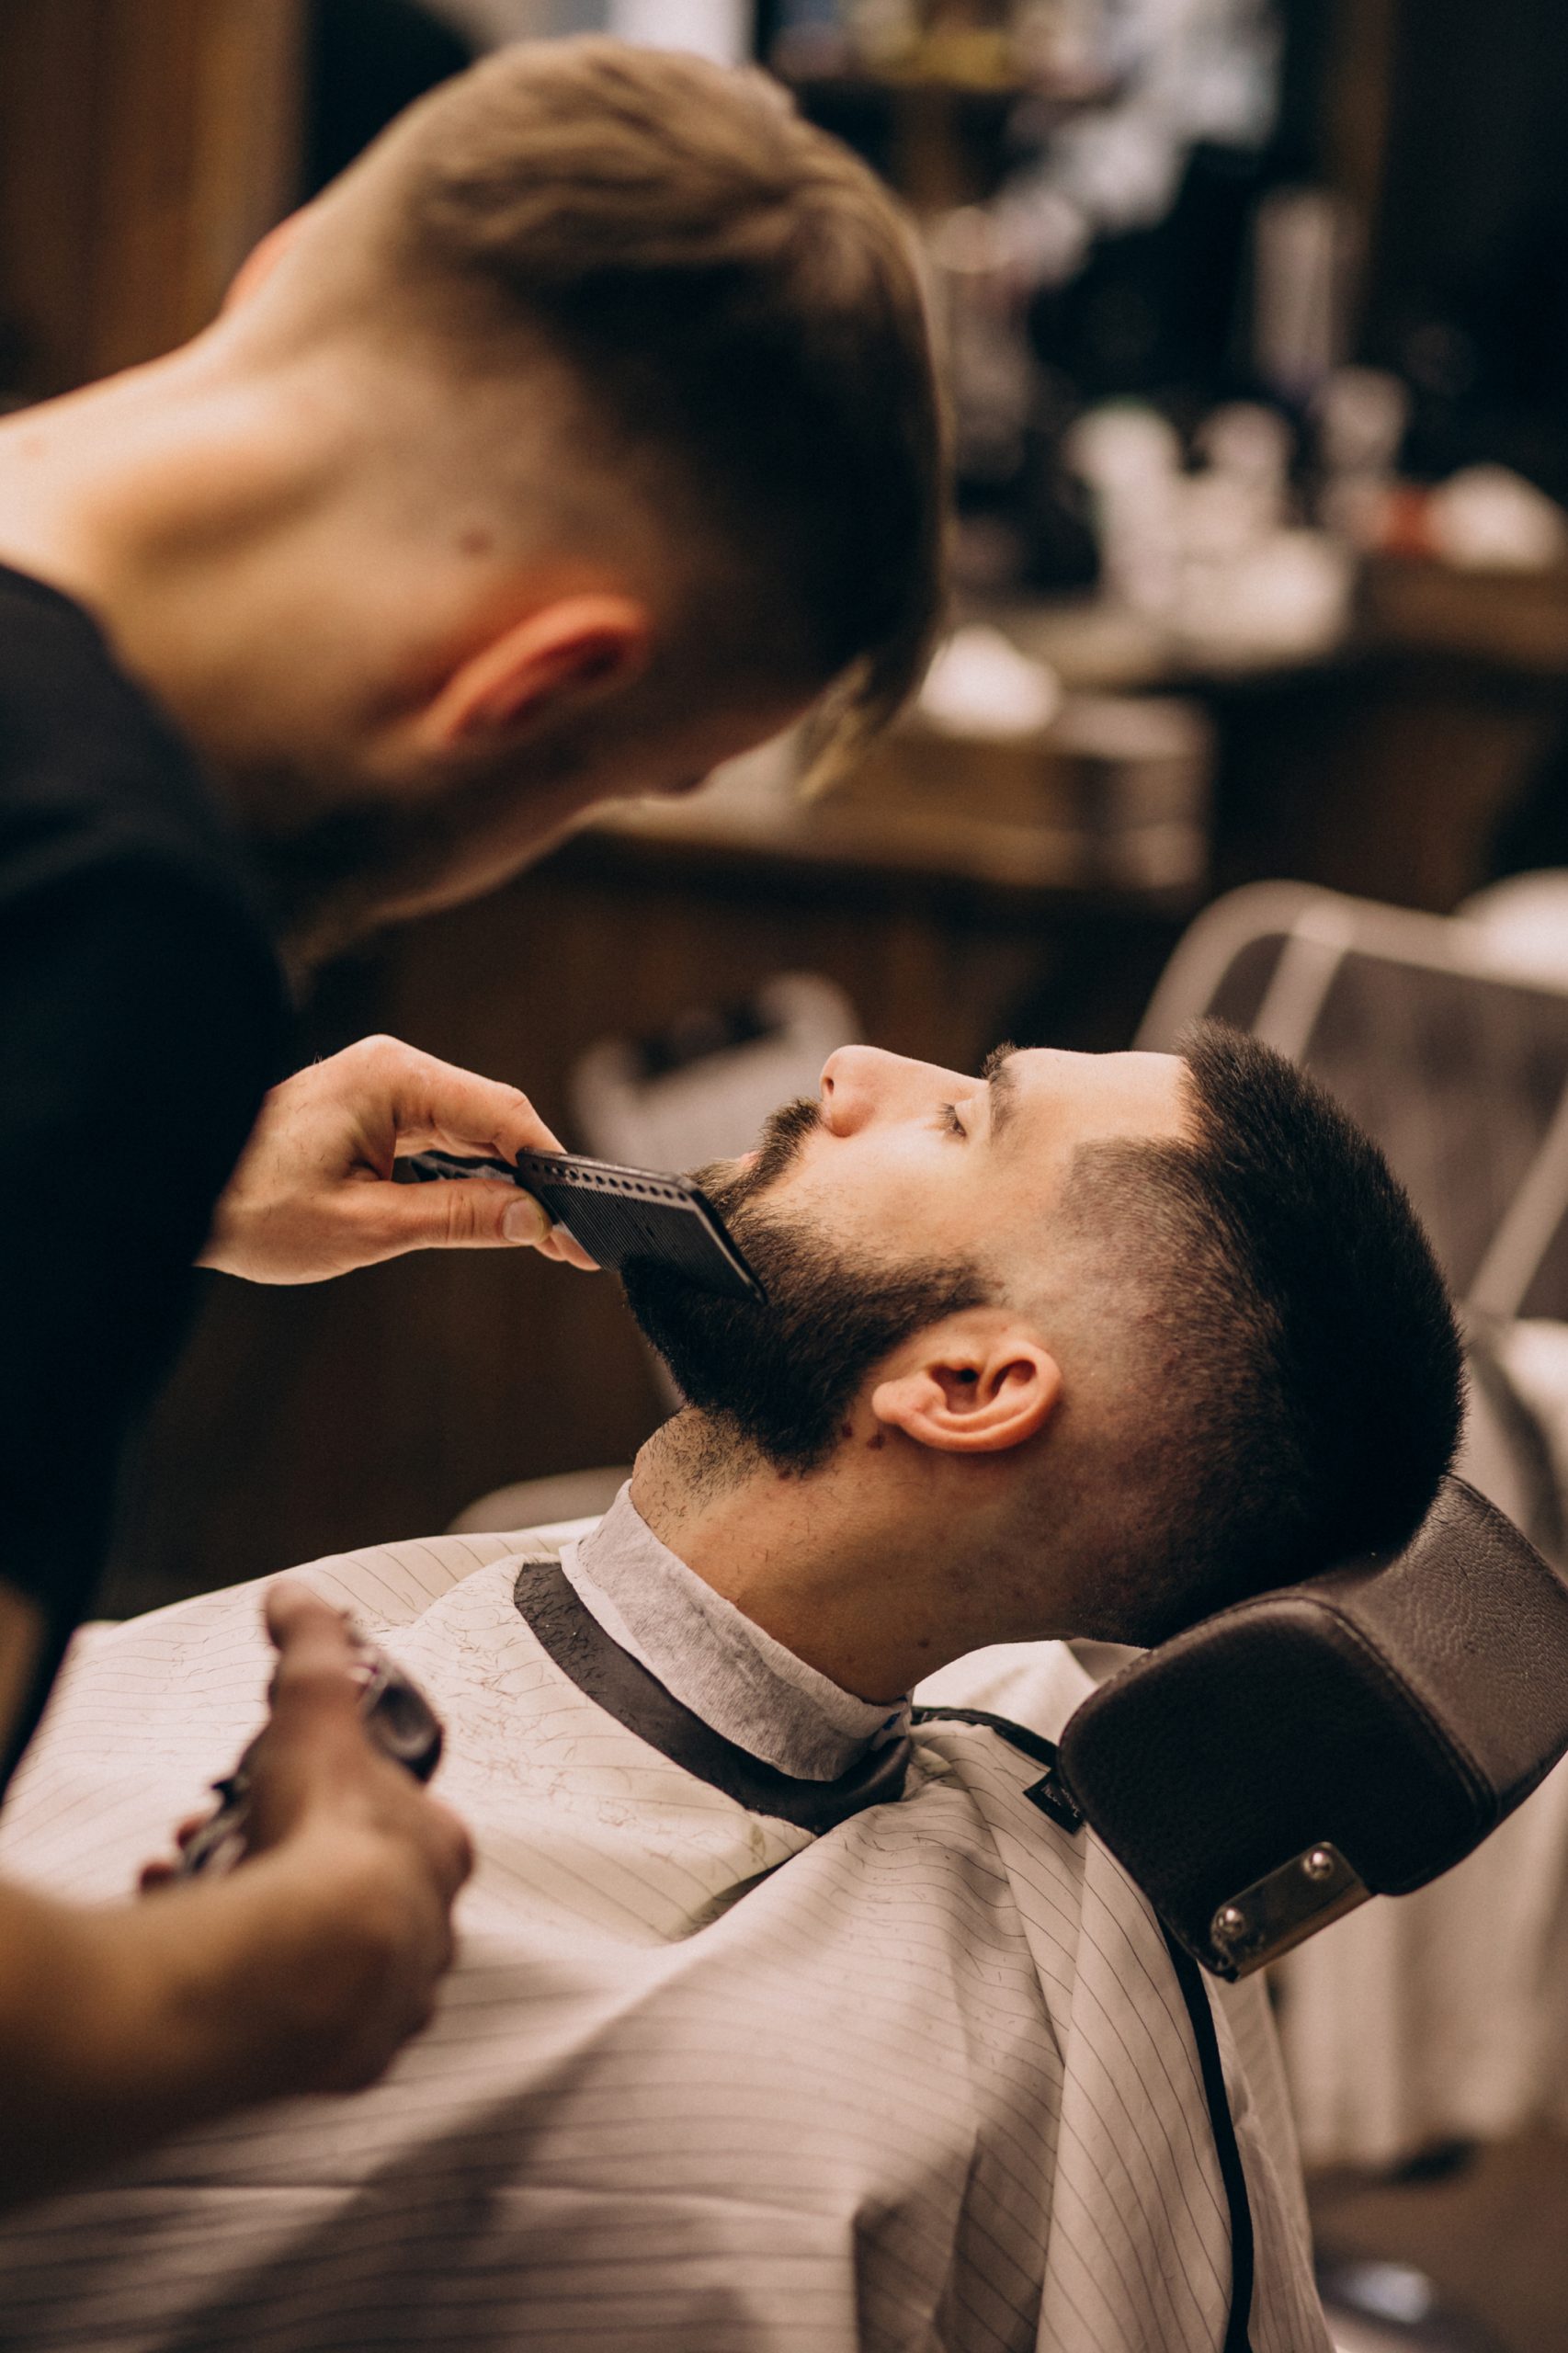 Man at a barbershop salon doing haircut and beard trim